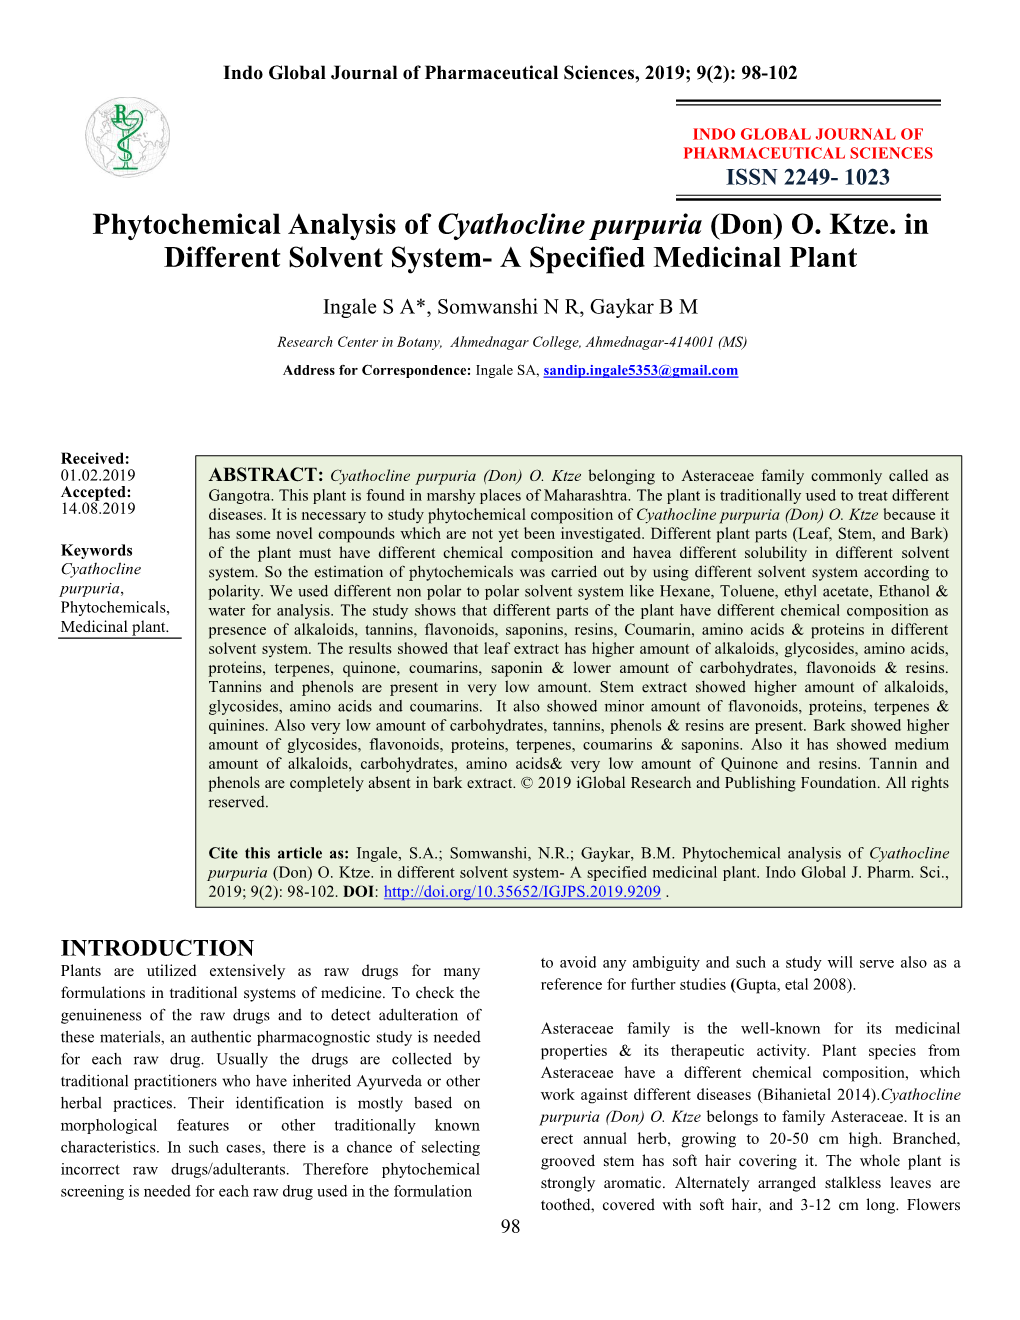 Phytochemical Analysis of Cyathocline Purpuria (Don) O